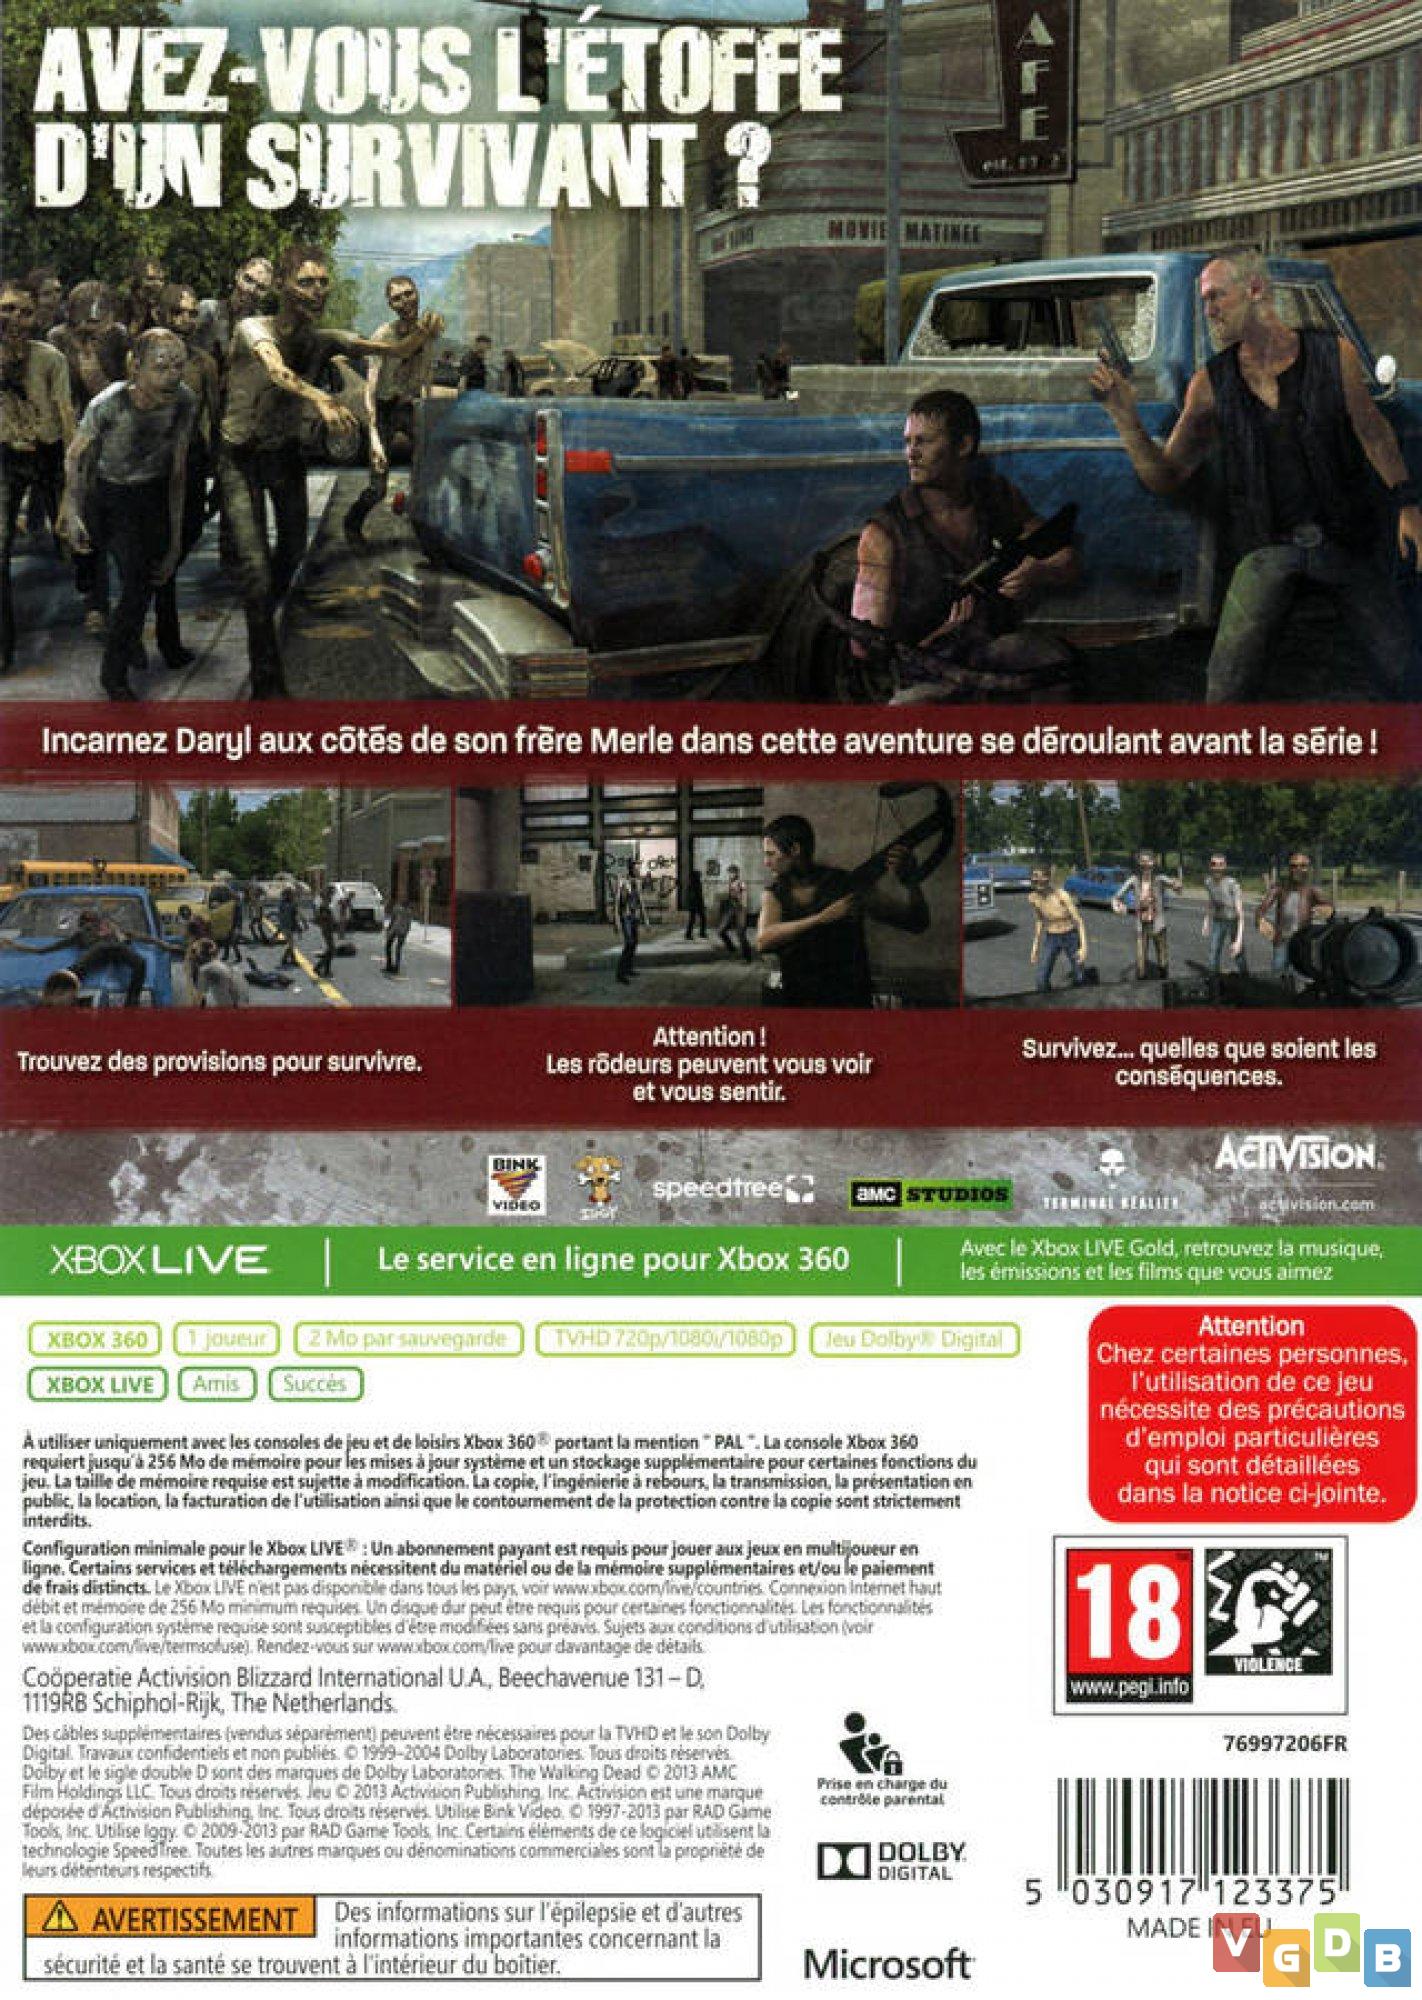 The Walking Dead Survival Instinct Xbox 360 - Activision - Jogos de Ação -  Magazine Luiza